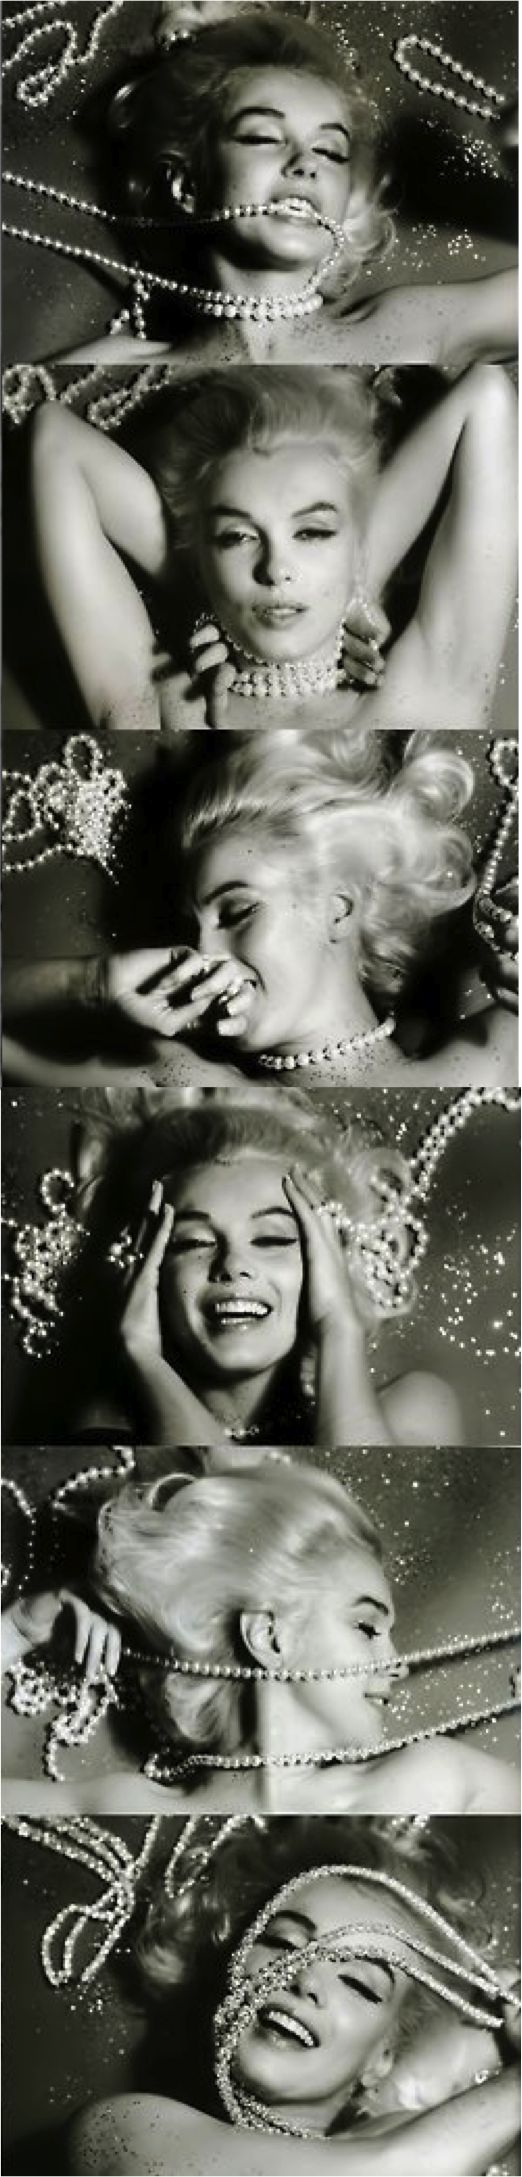 Marilyn Monroe photograph